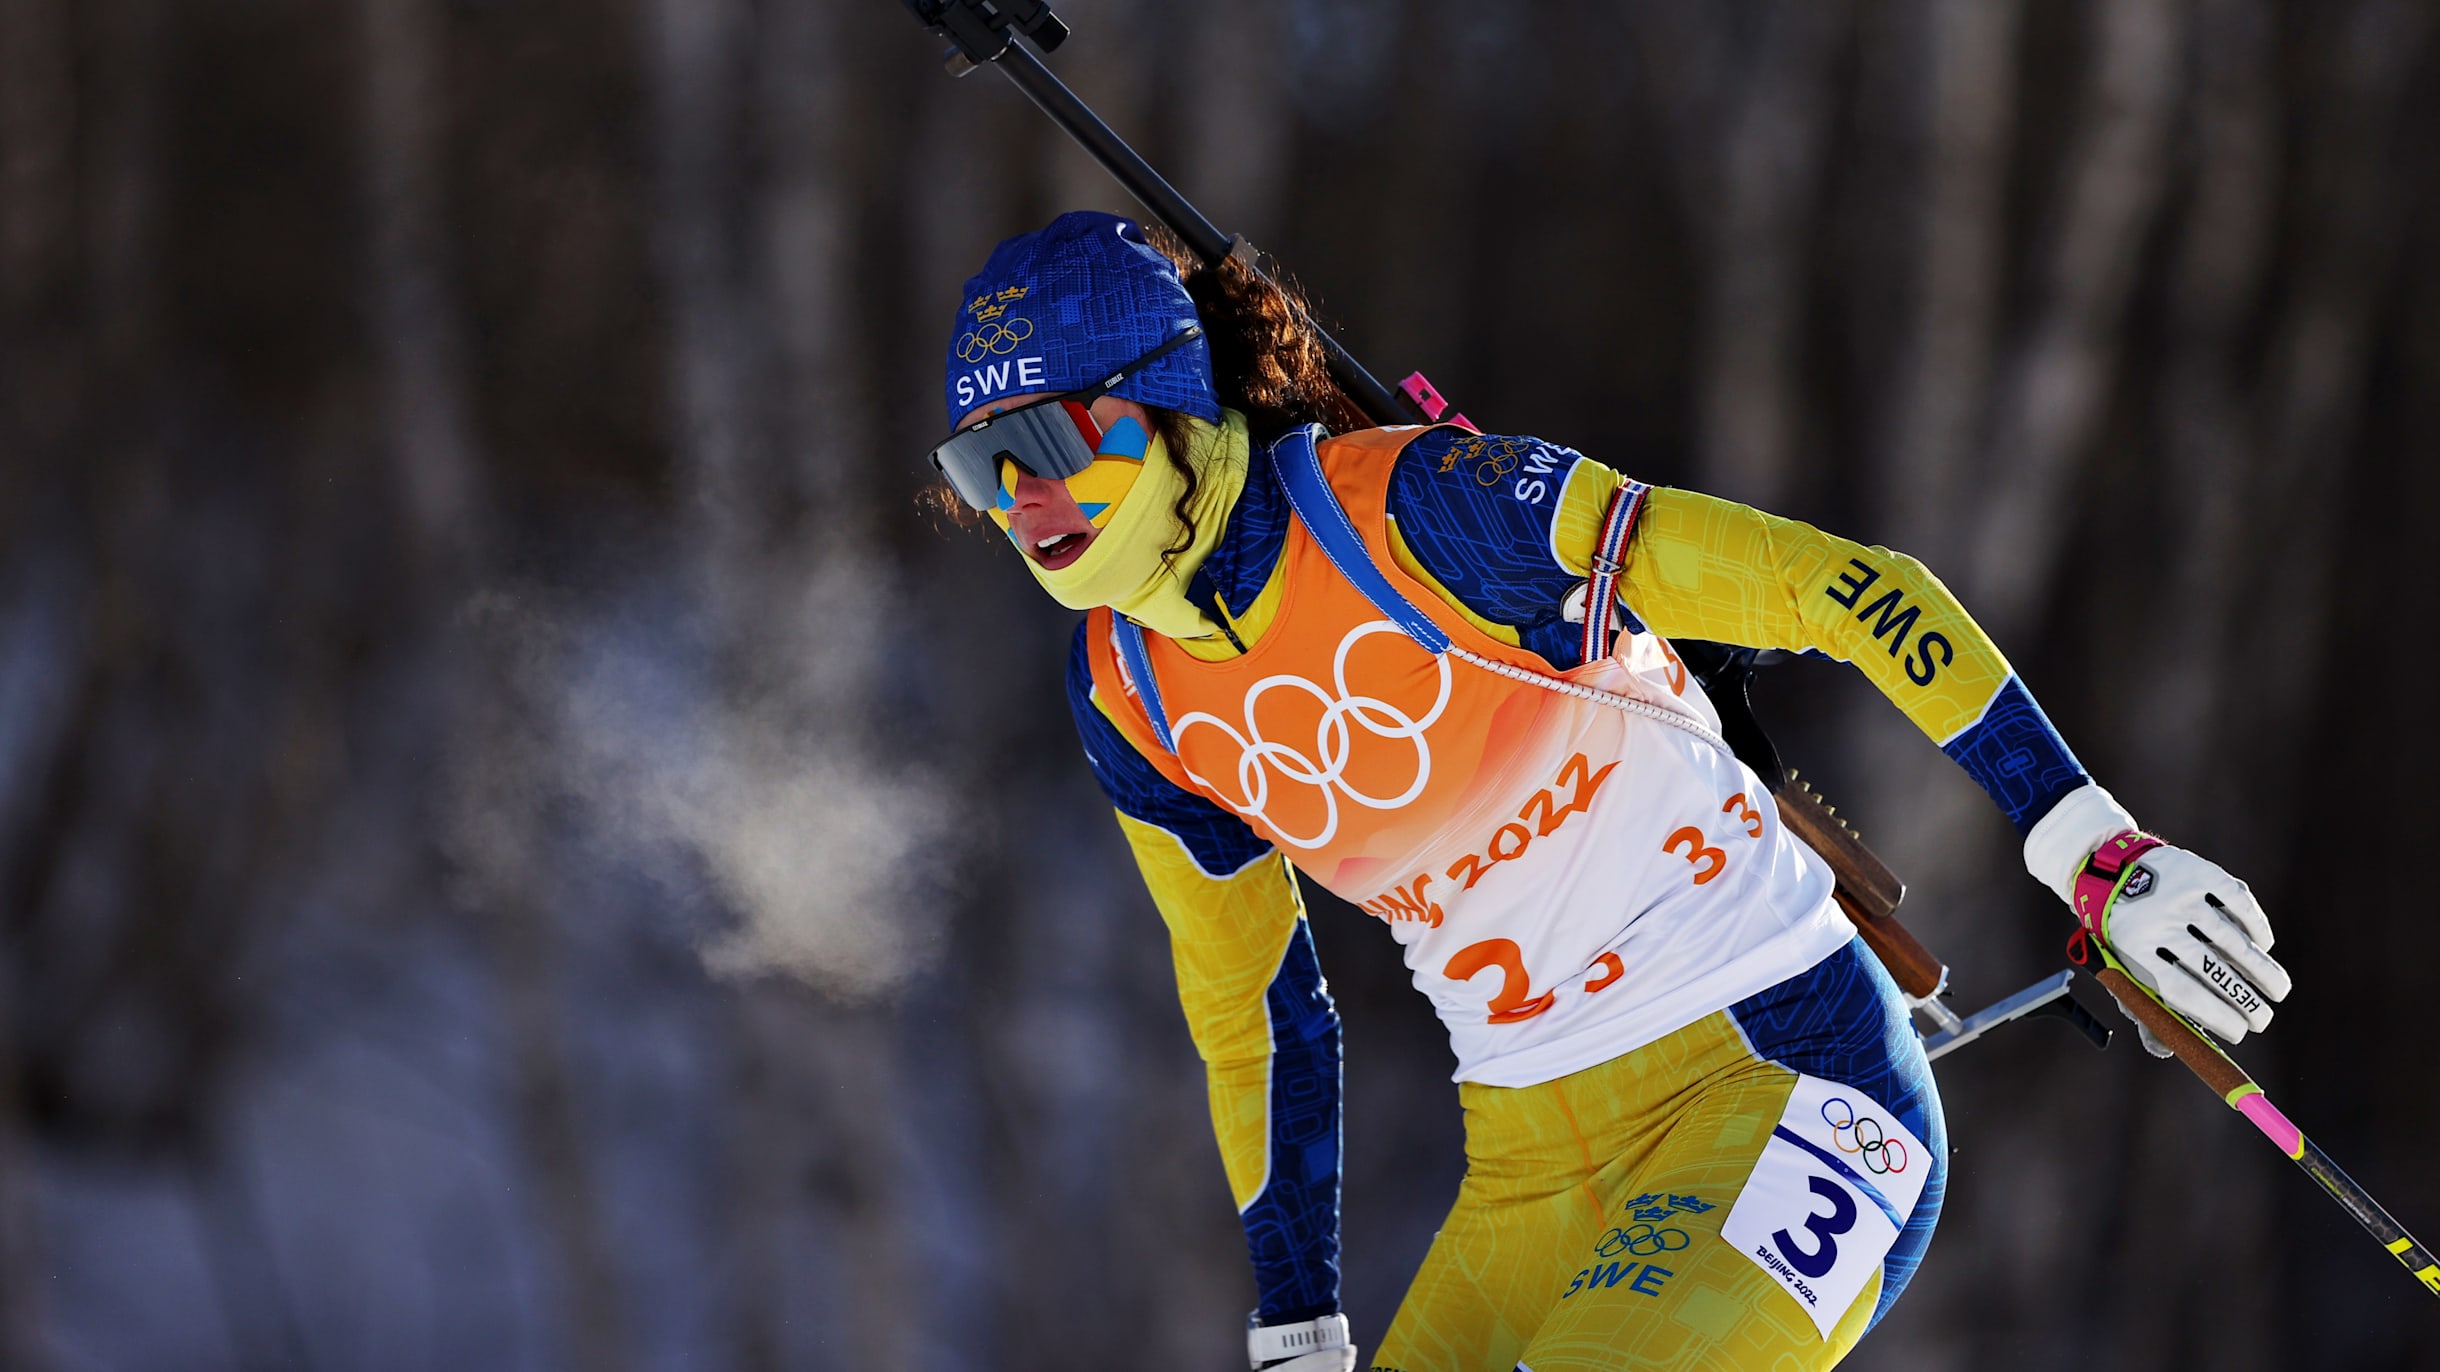 Medals update Sweden wins first womens 4x6km relay gold in Beijing 2022 biathlon